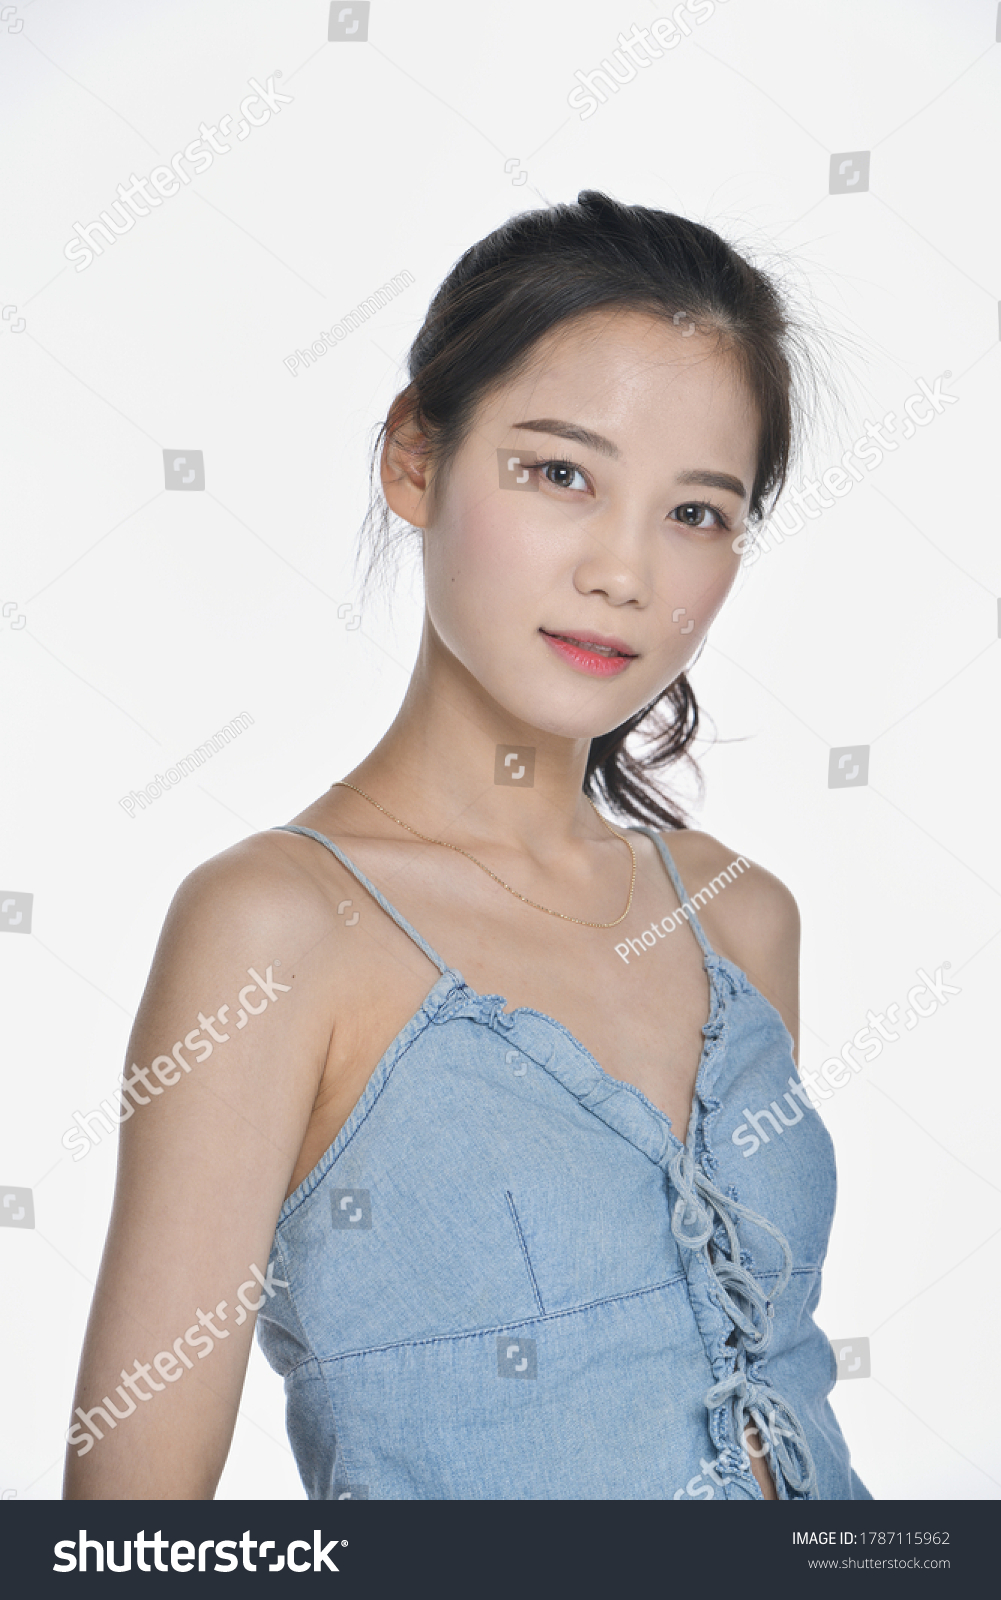 Beautiful Korean Woman Sky Blue Shirt Stock Photo 1789936202 